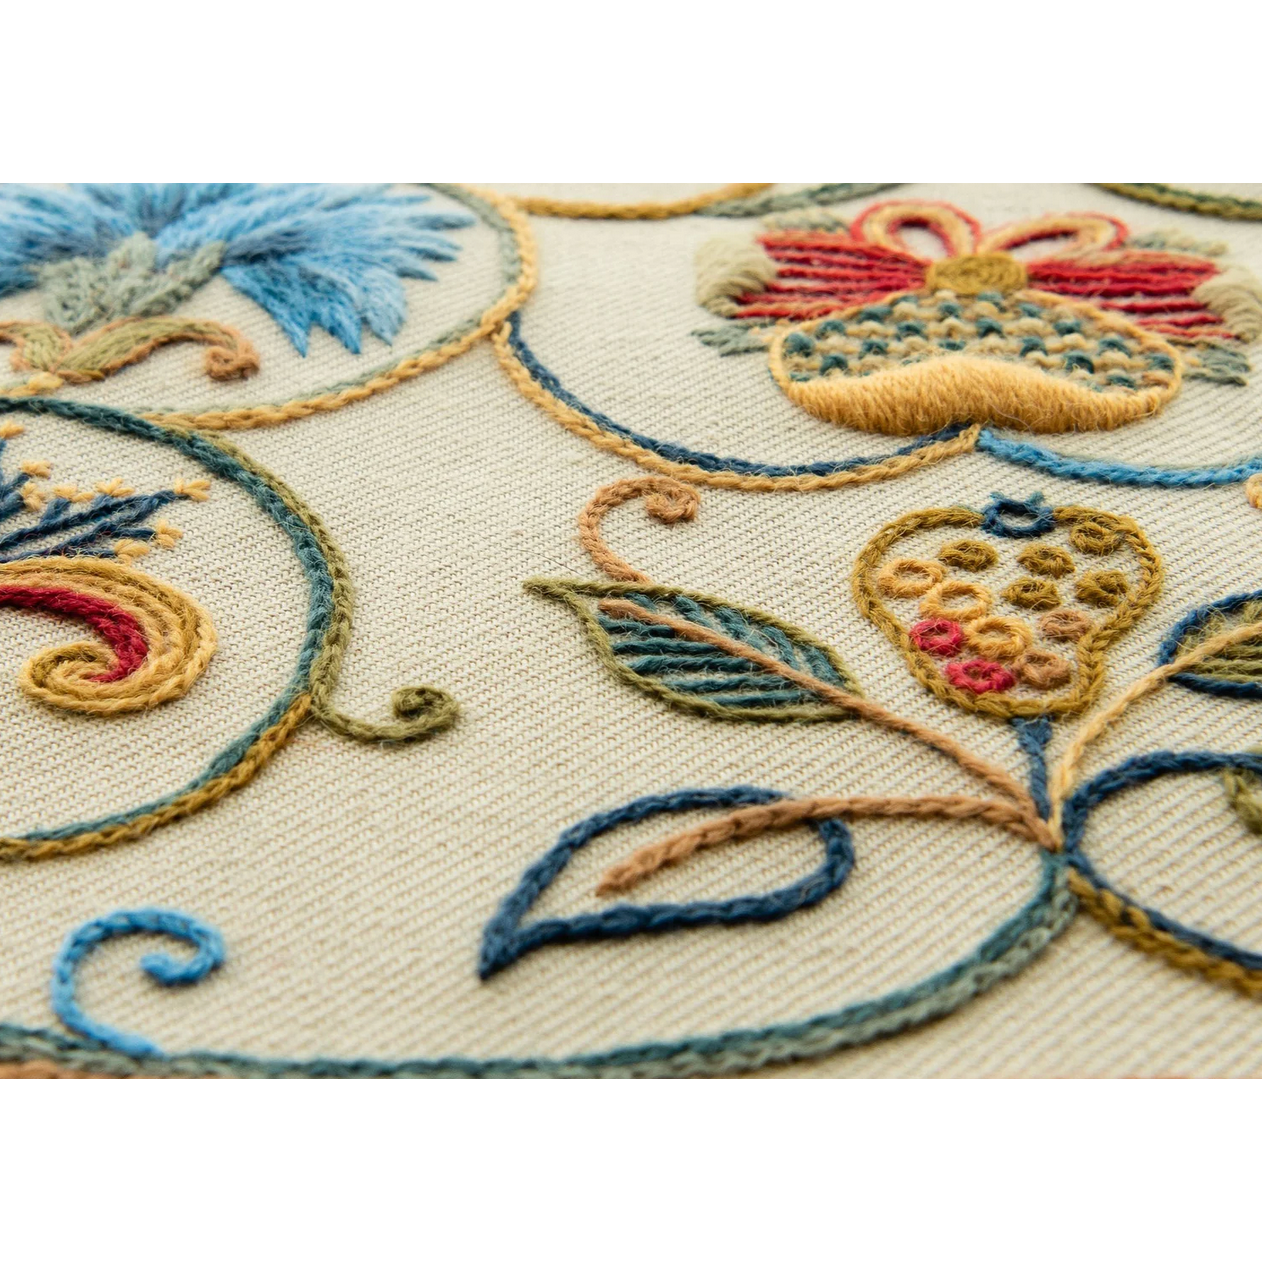 Crewel Embroidery Kits 